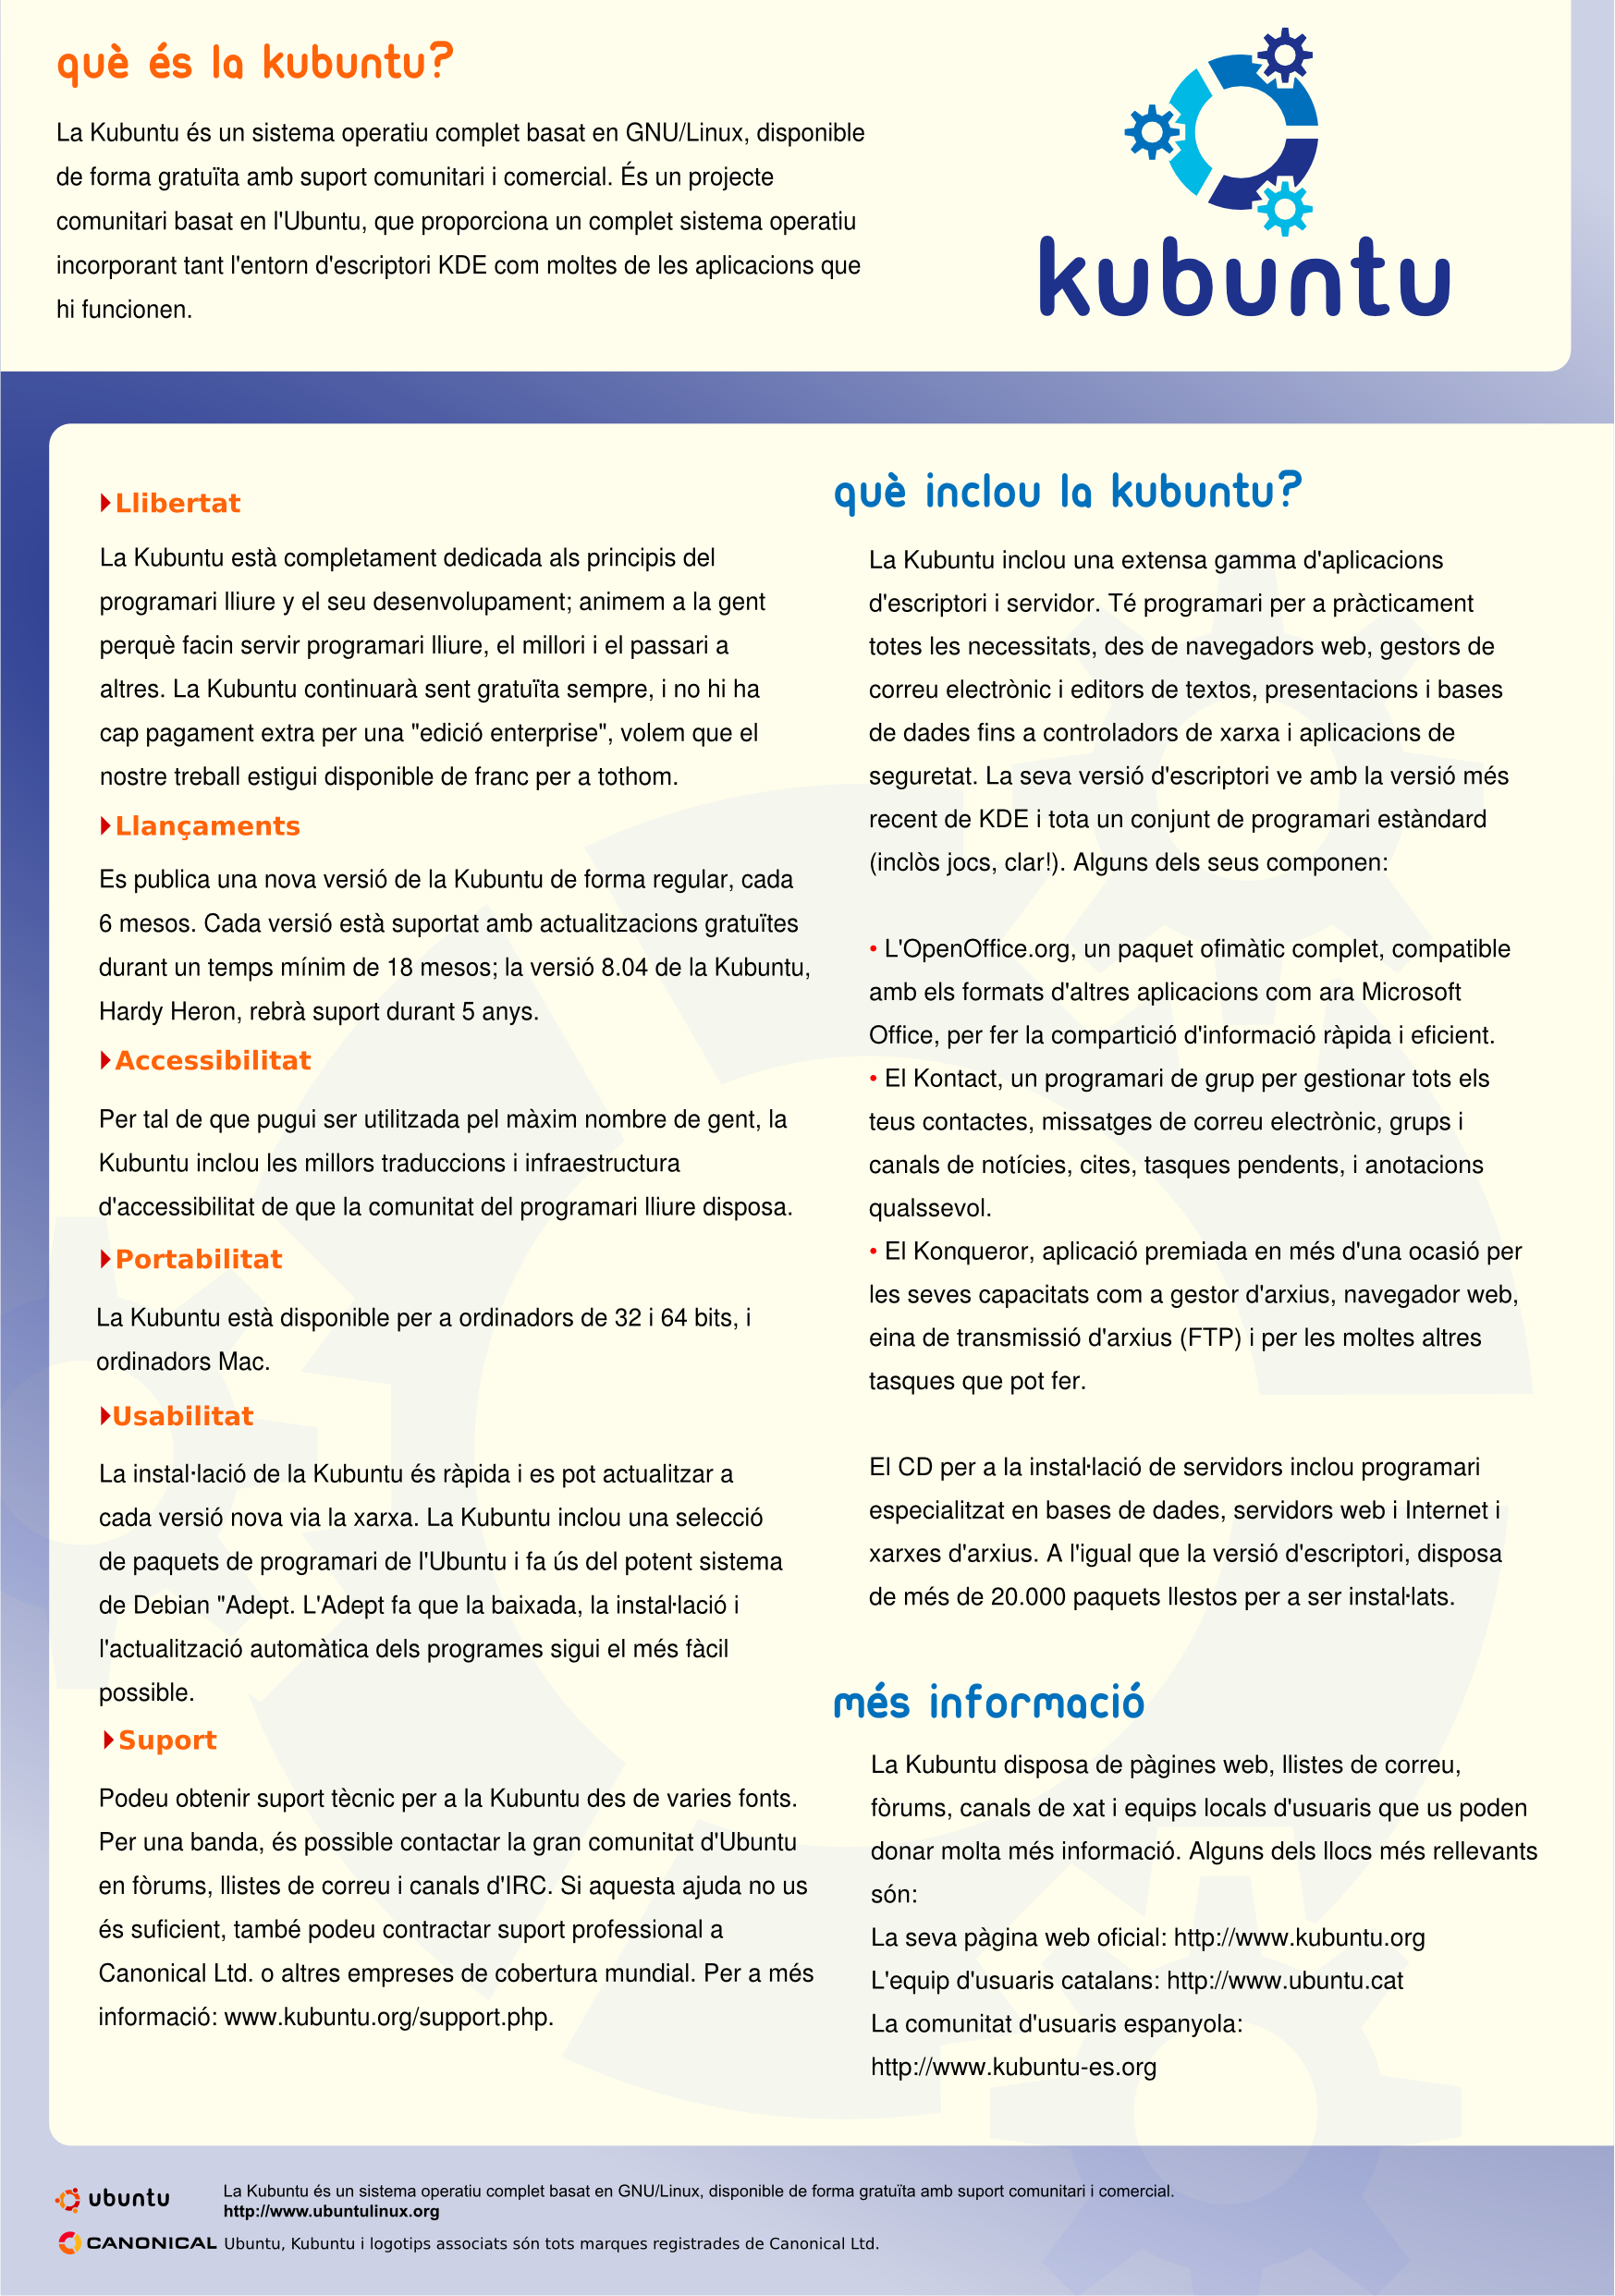 kubuntu-leaflet-ca.png